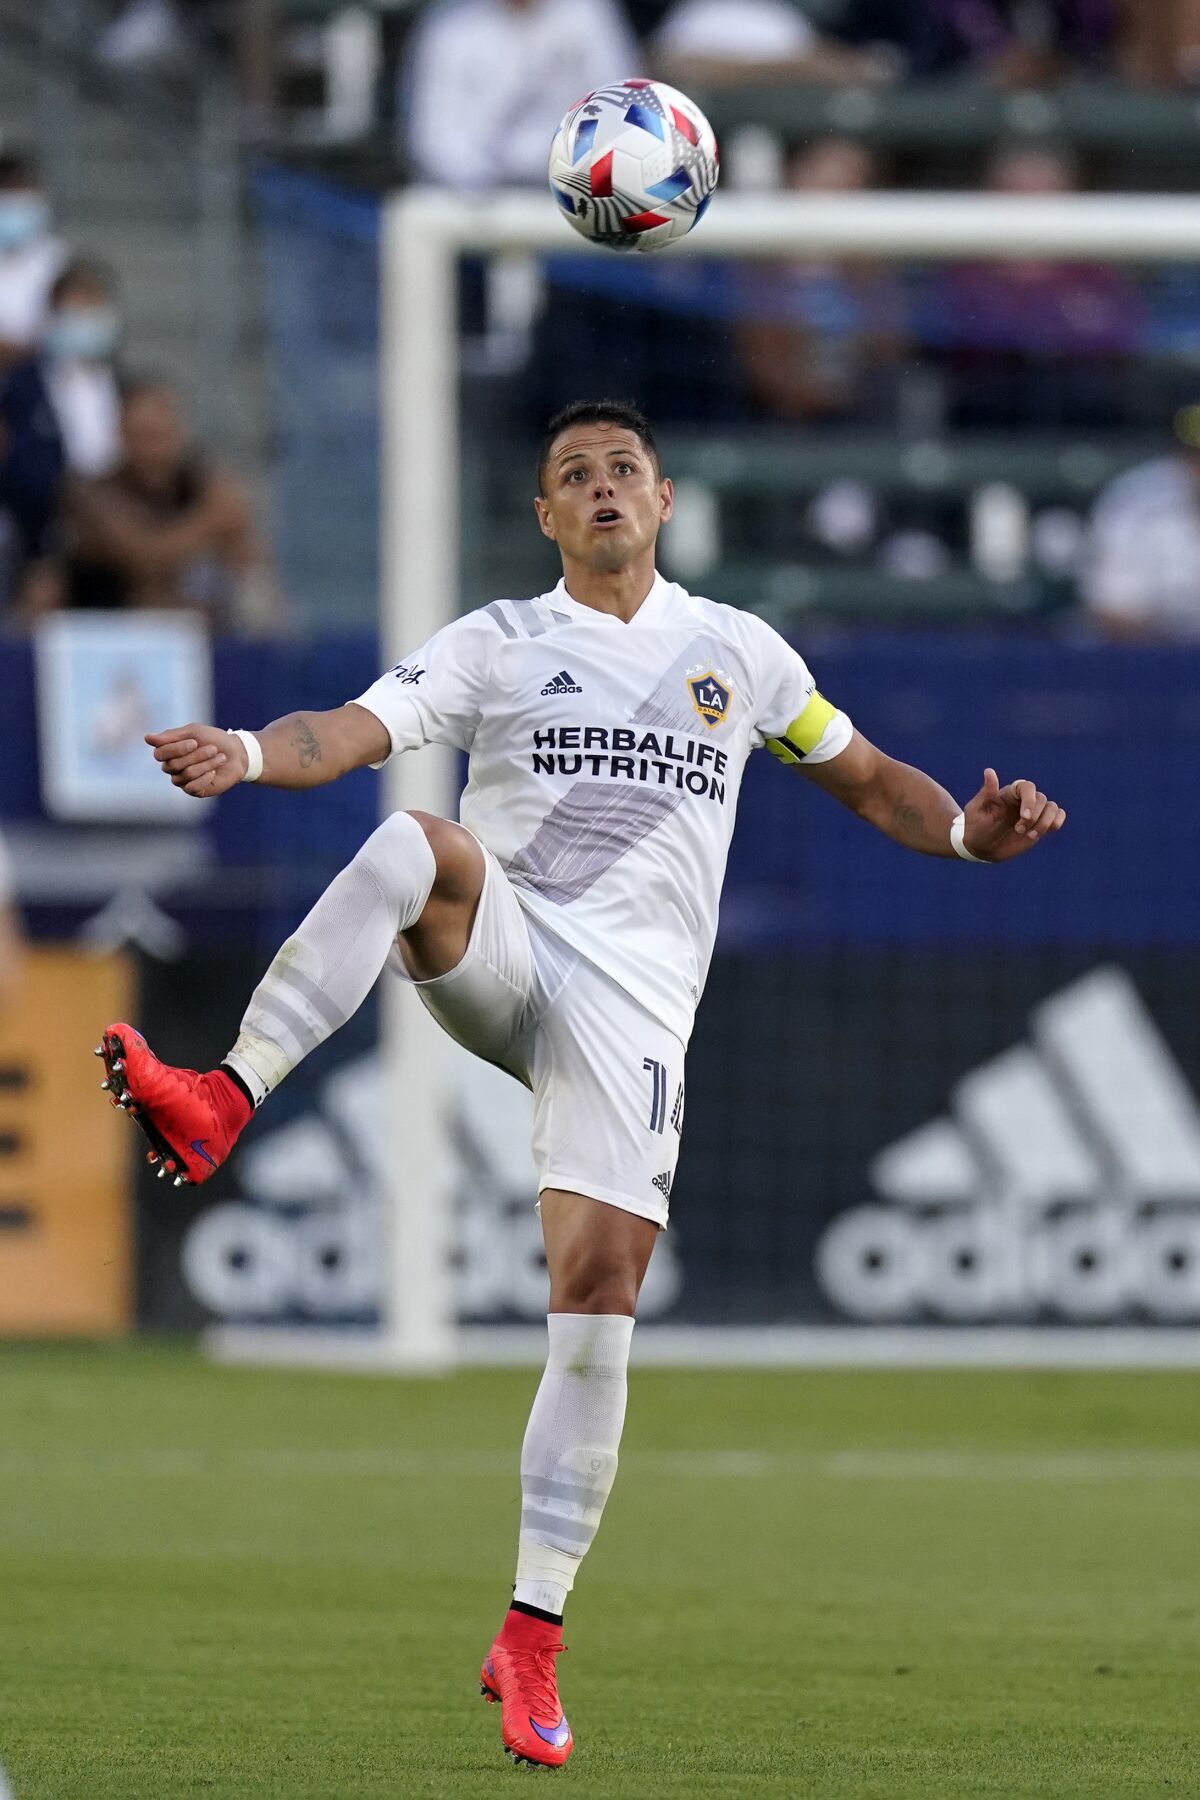 Galaxy forward Javier "Chicharito" Hernandez tries to control the ball 